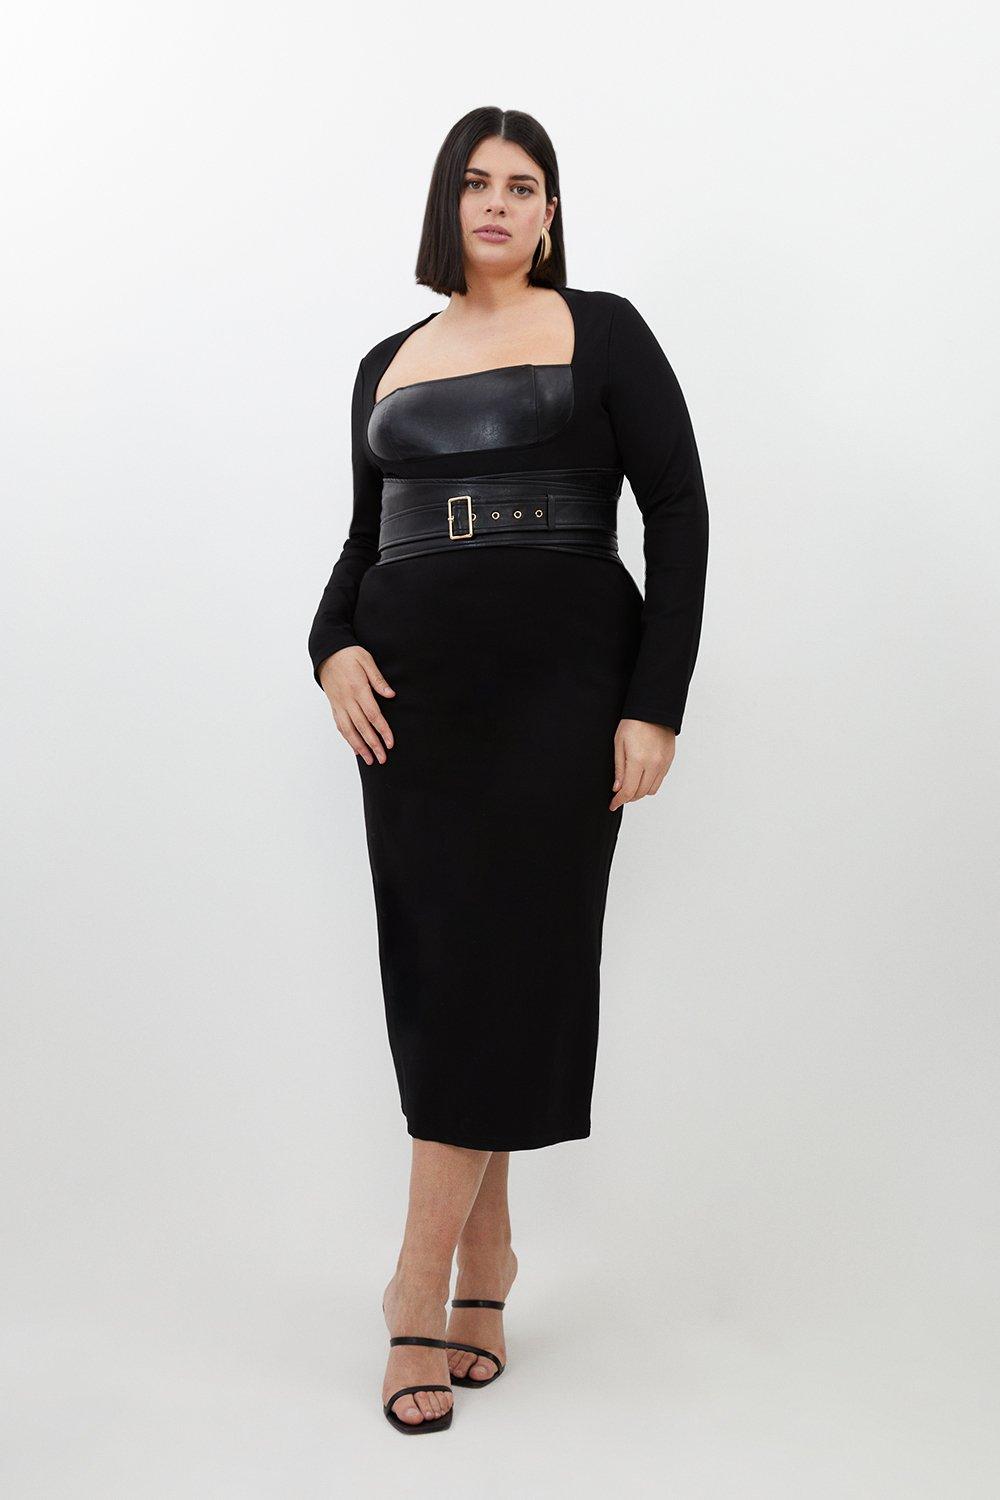 Premium Photo  Beauty curve plus size woman in a gray mini dress